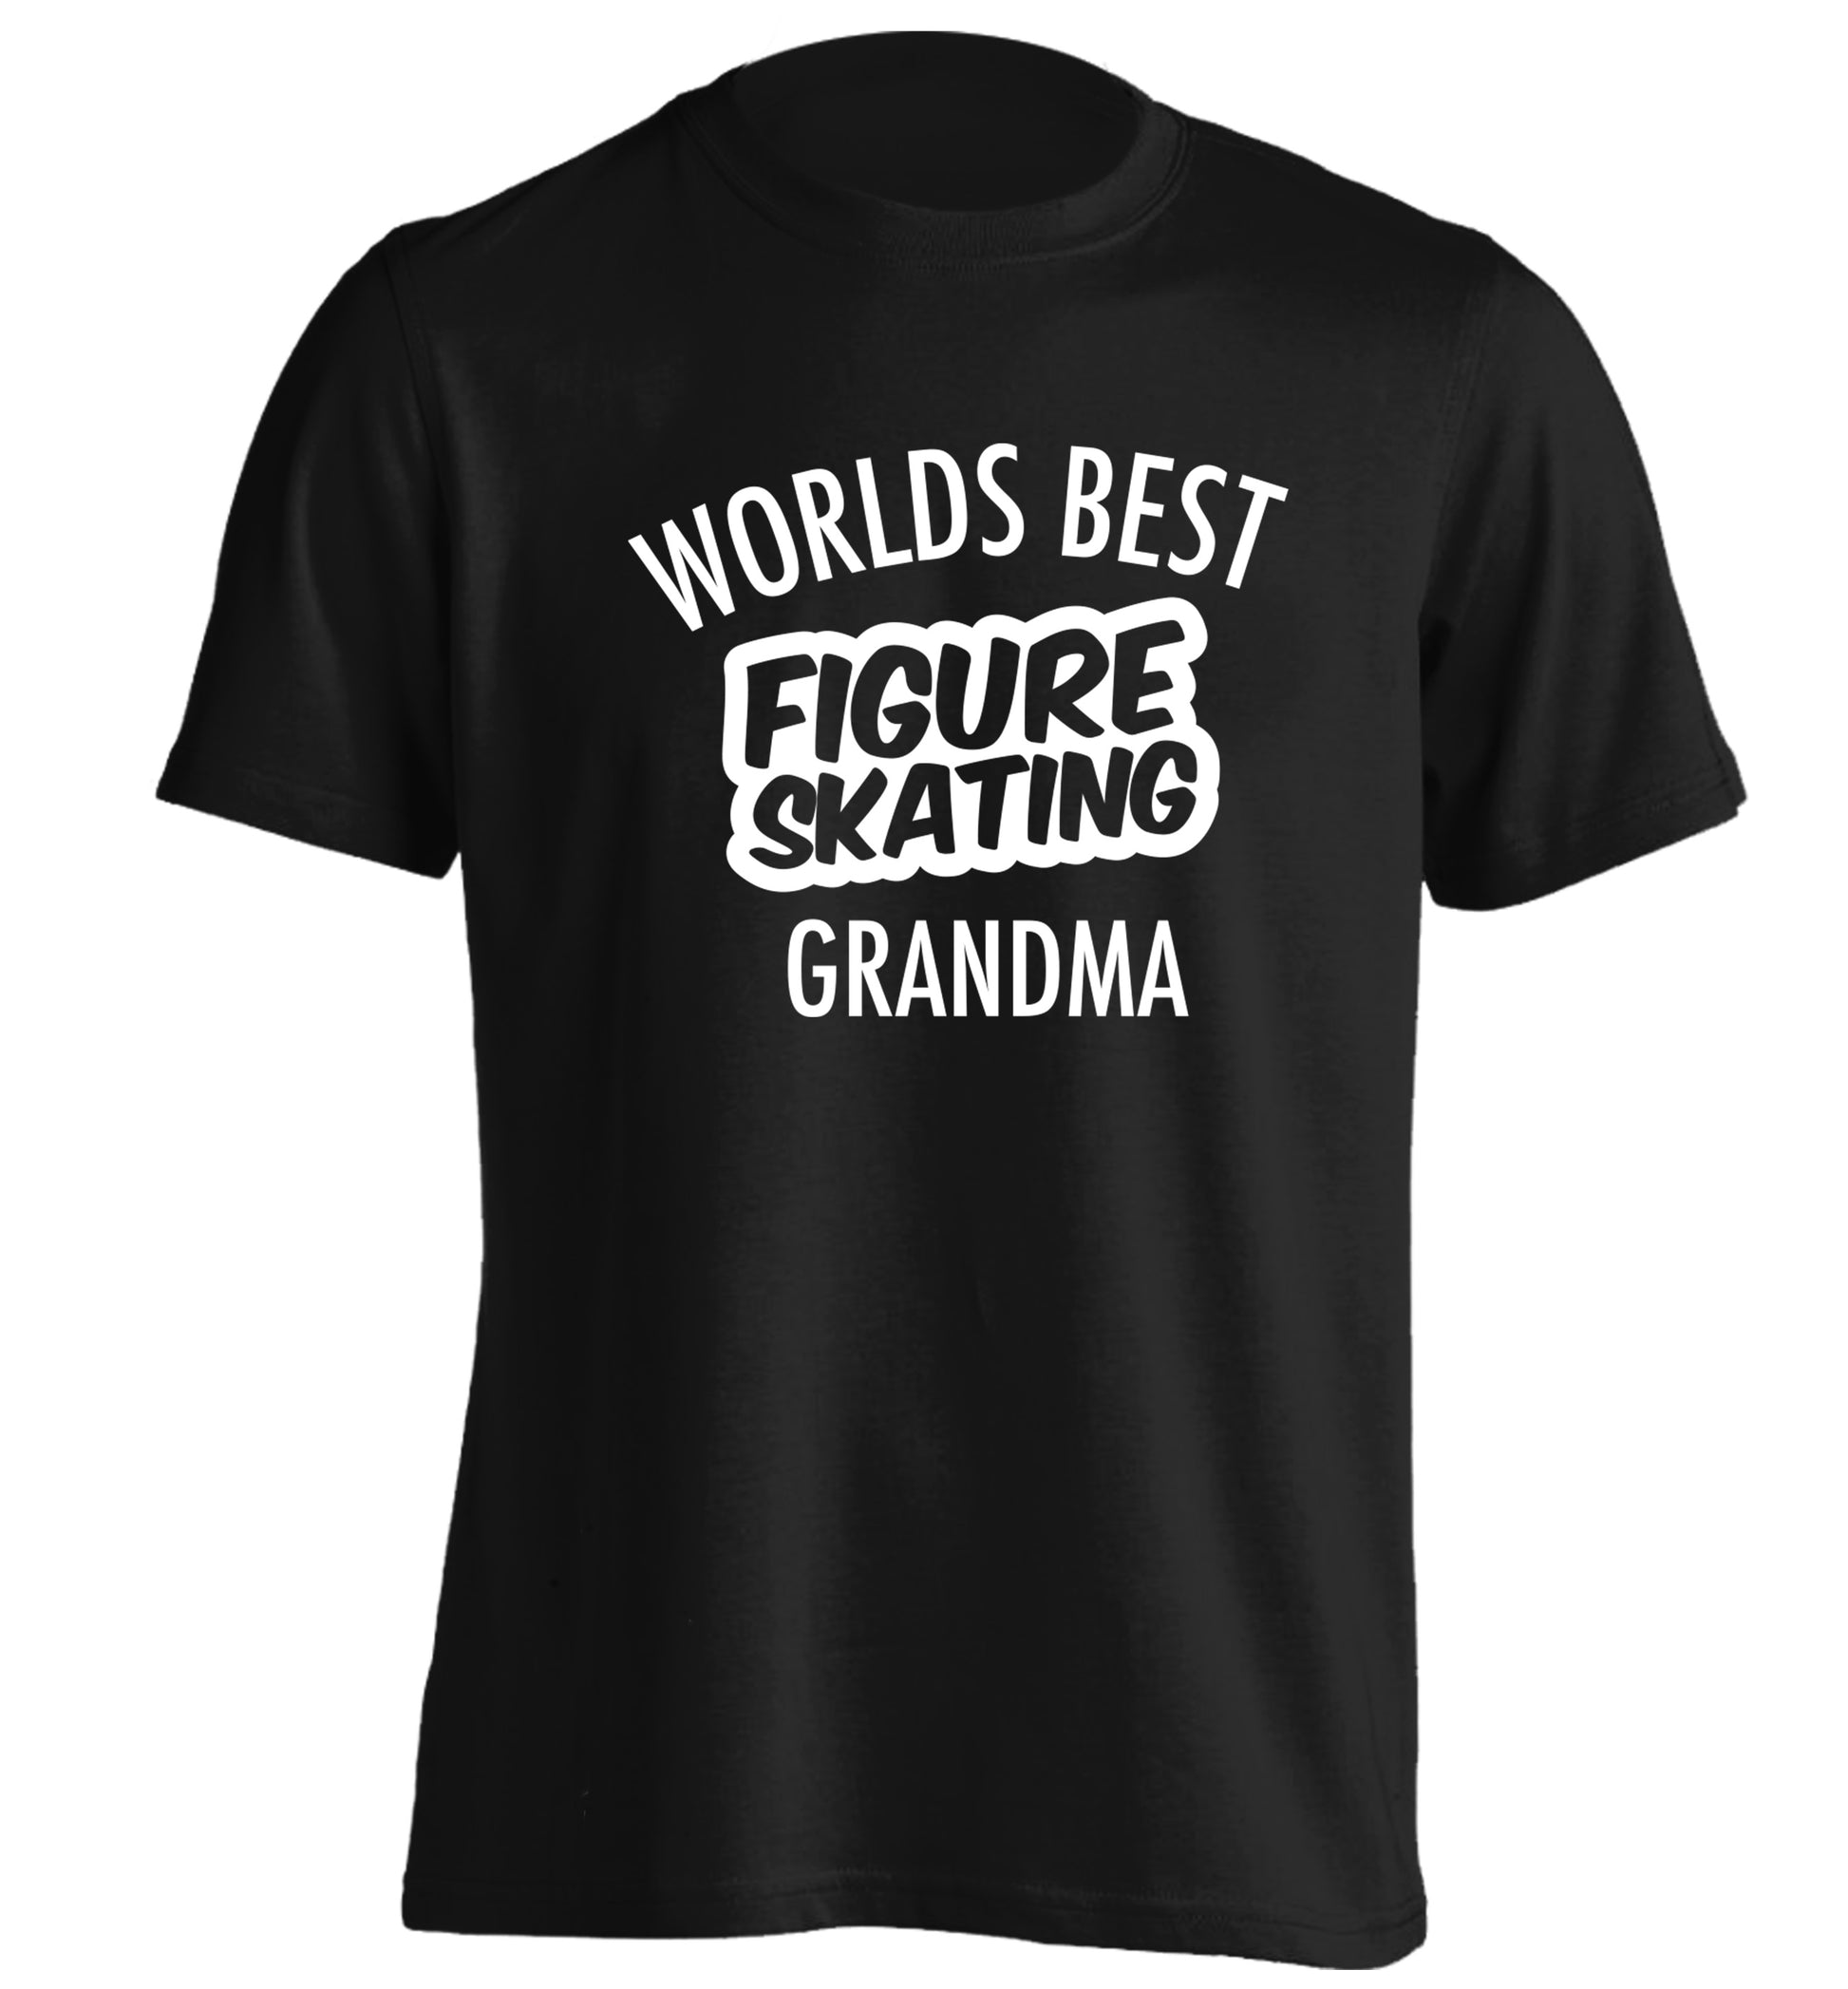 Worlds best figure skating grandma adults unisexblack Tshirt 2XL